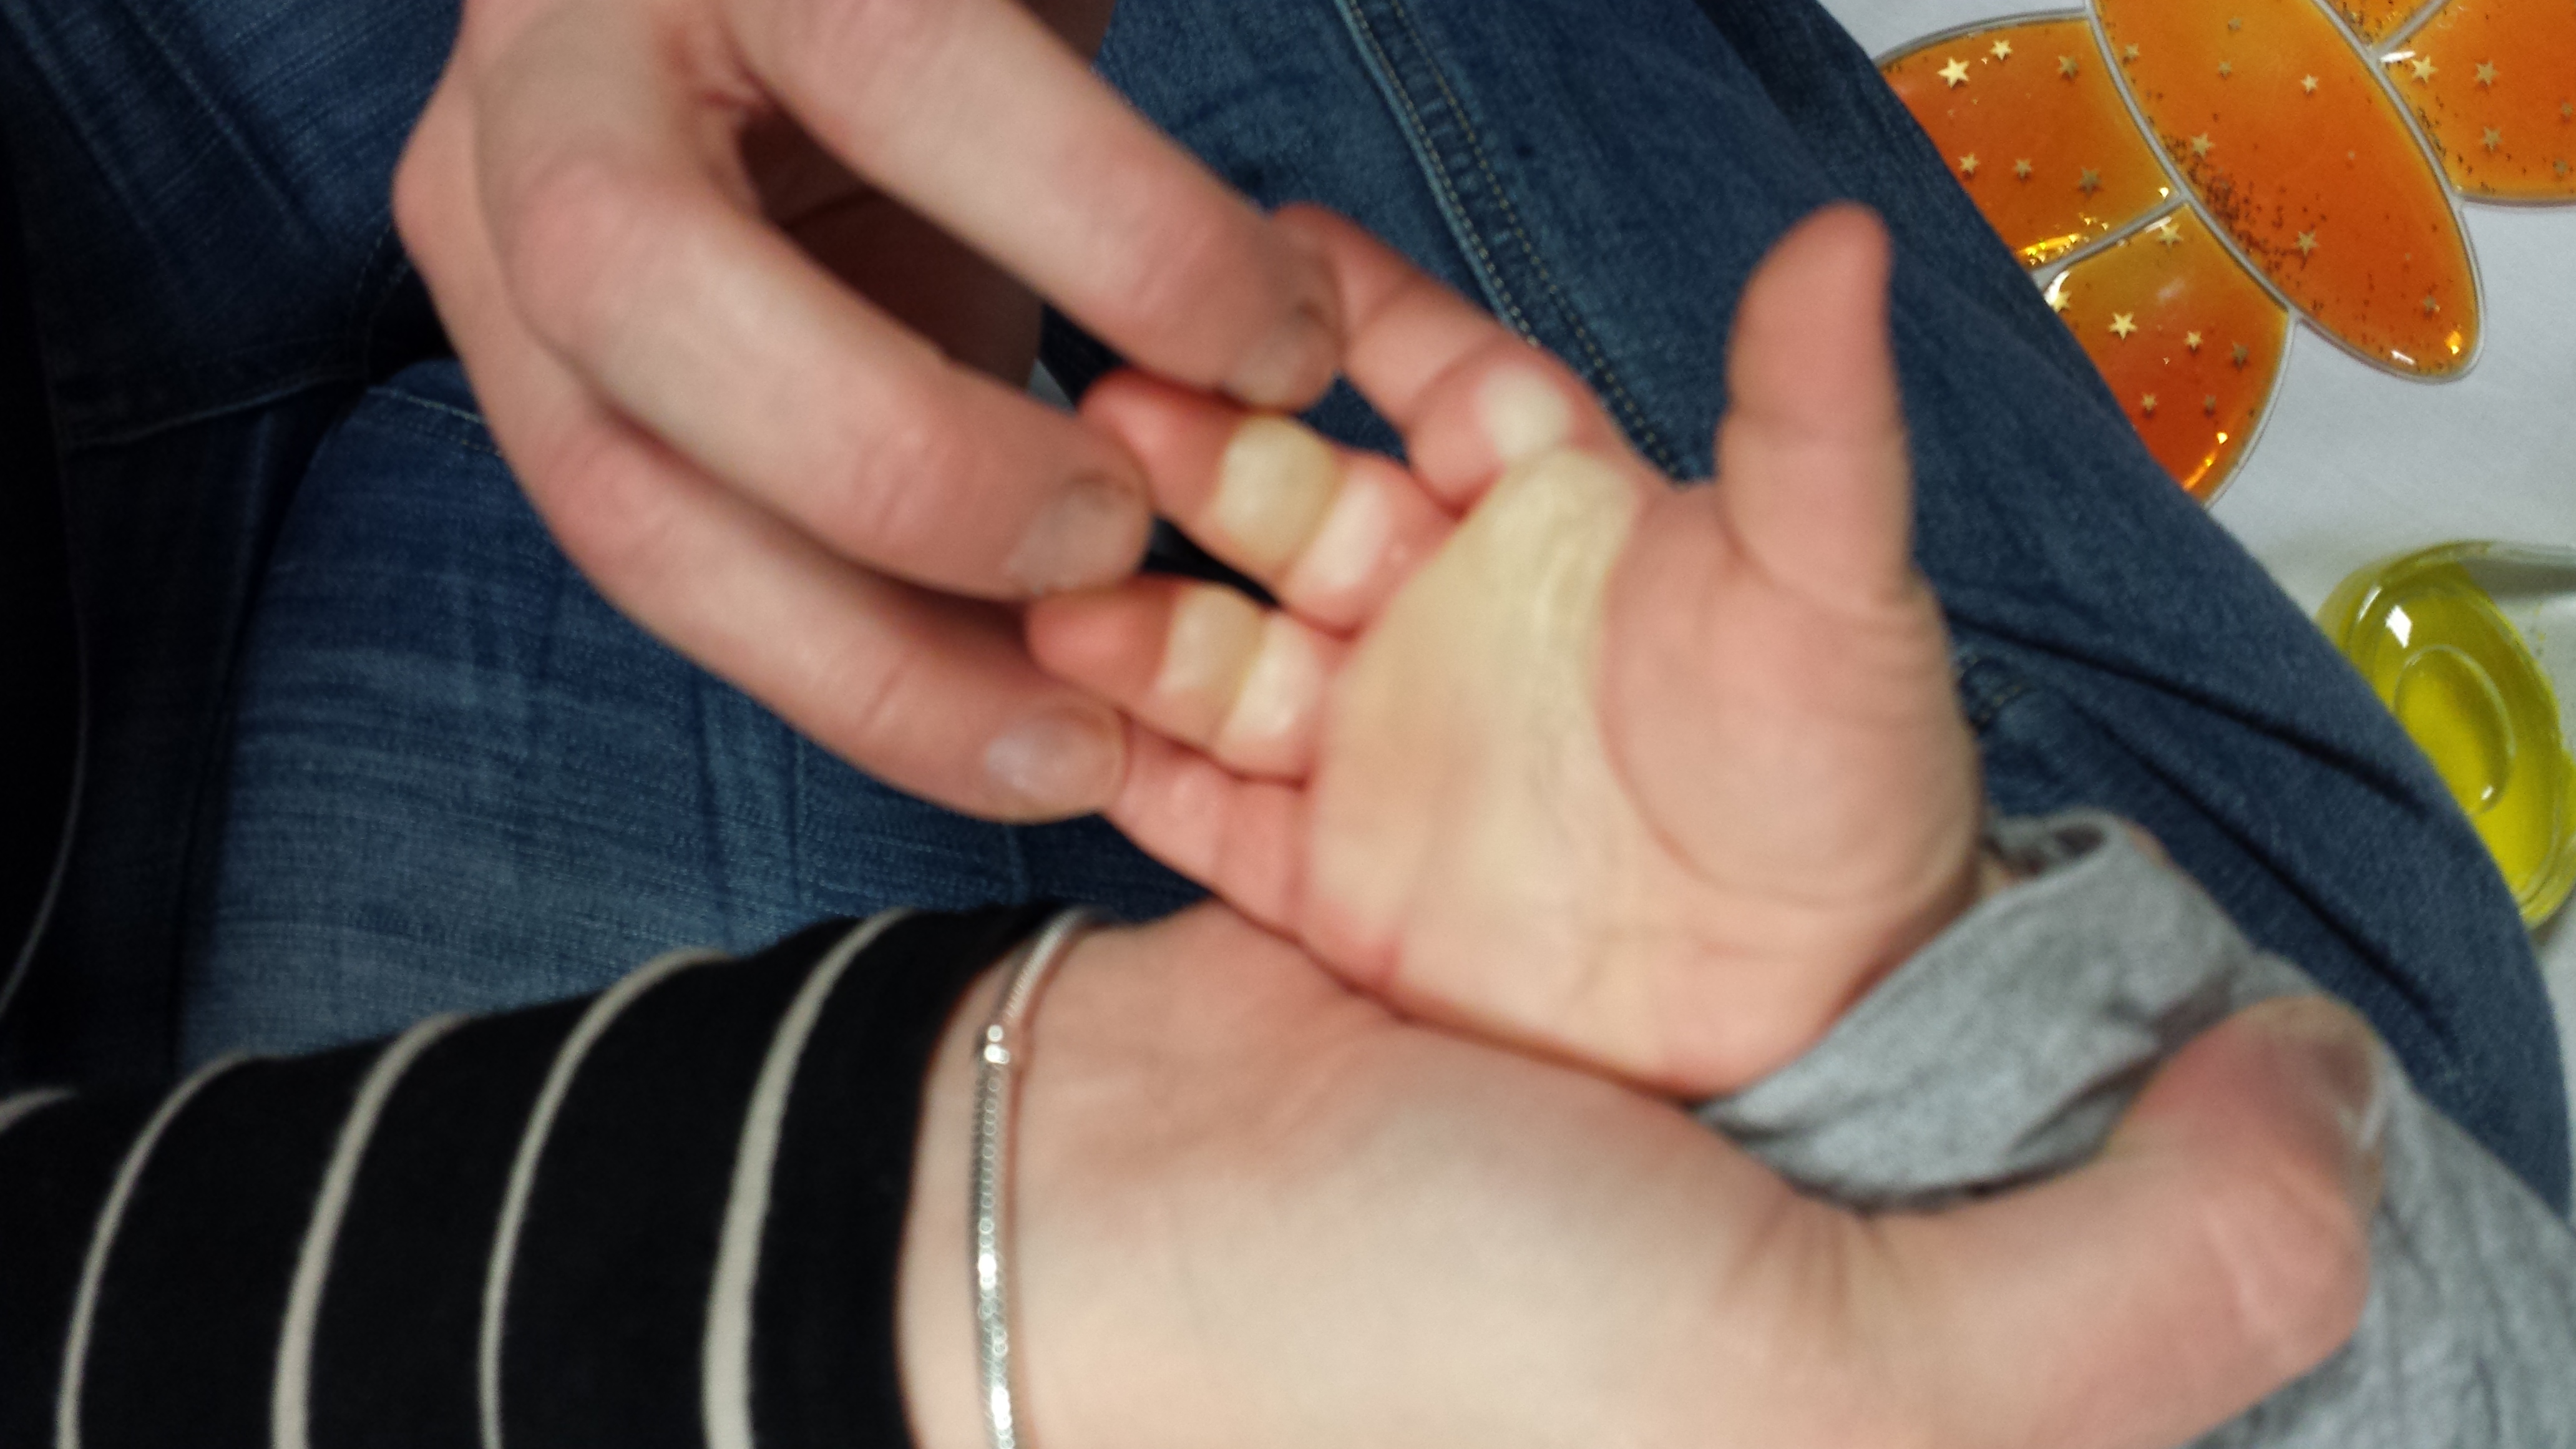 Todder's burnt hand